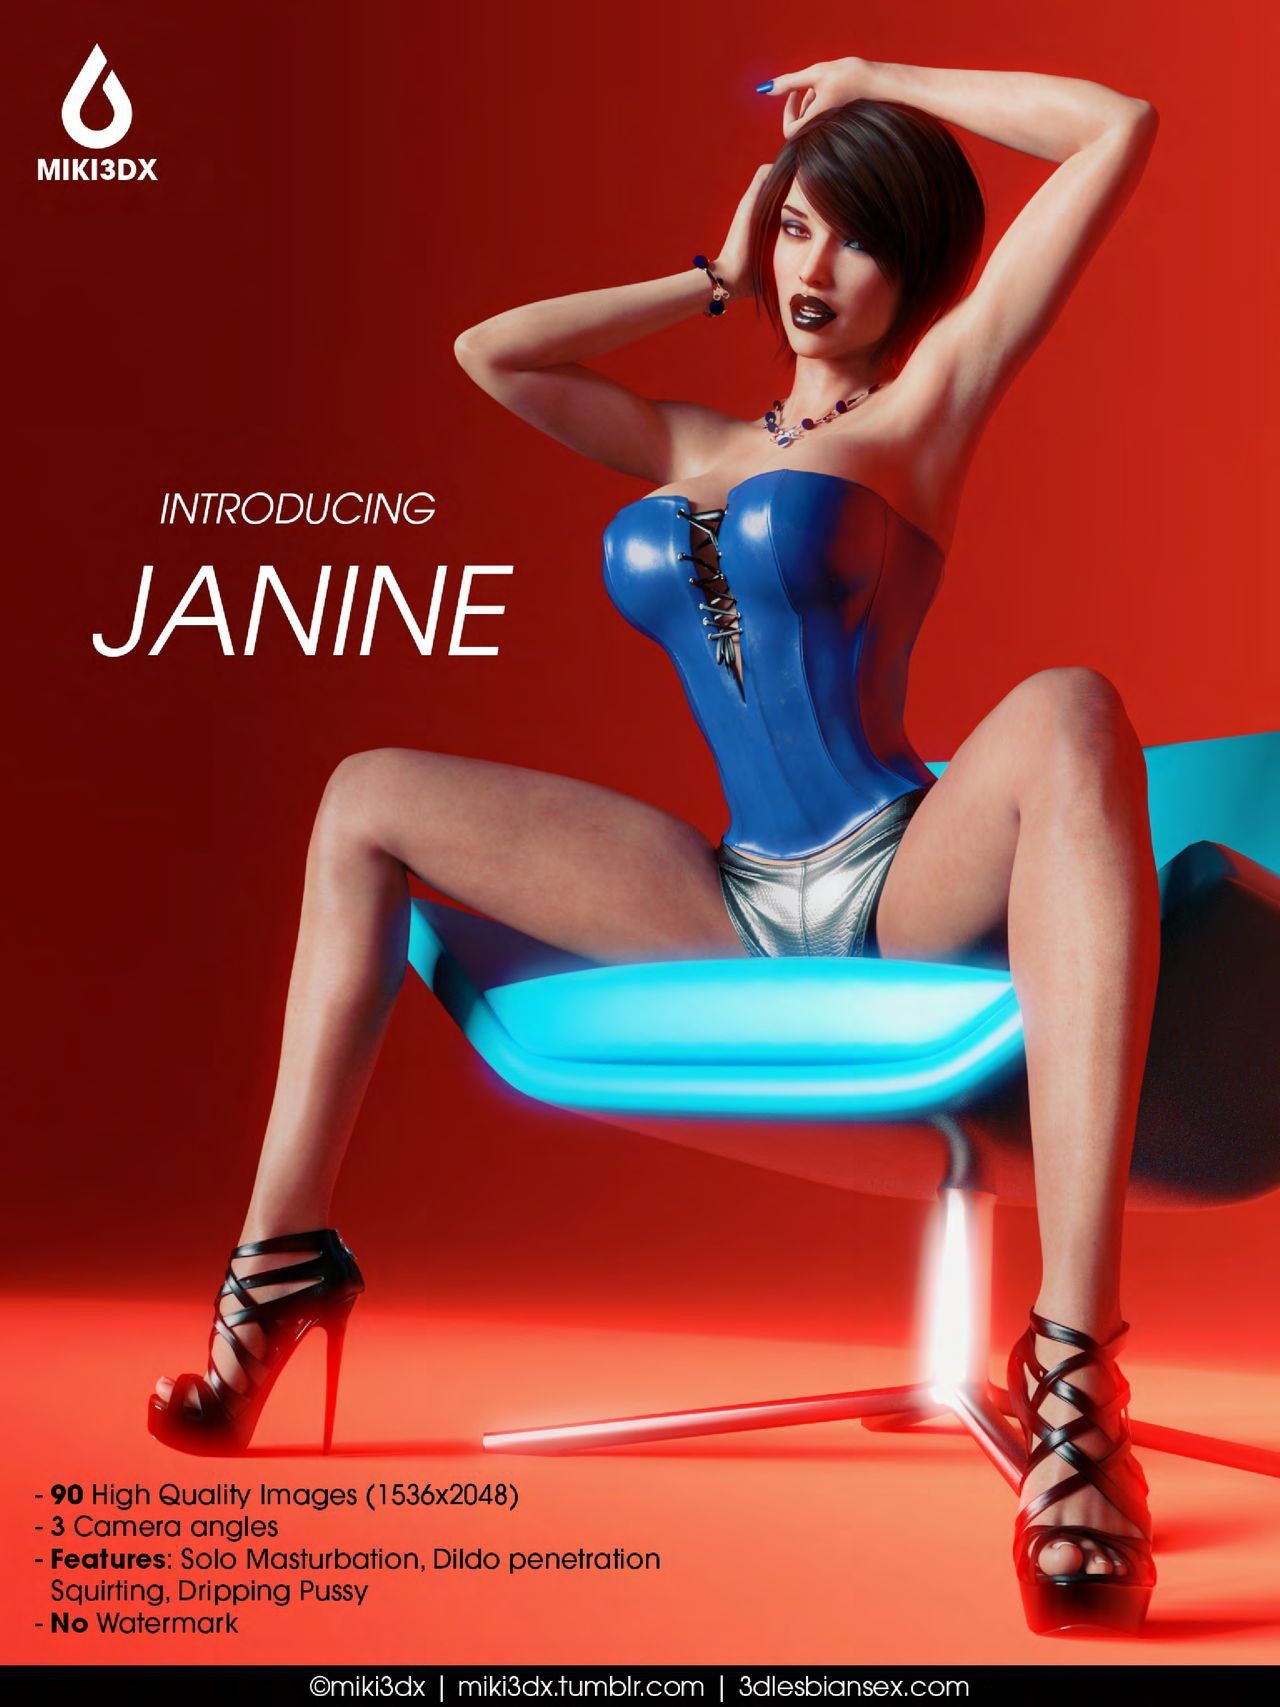 Costume [Miki3DX] Introducing Janine (Pics + Gifs + Animation) Mature Woman